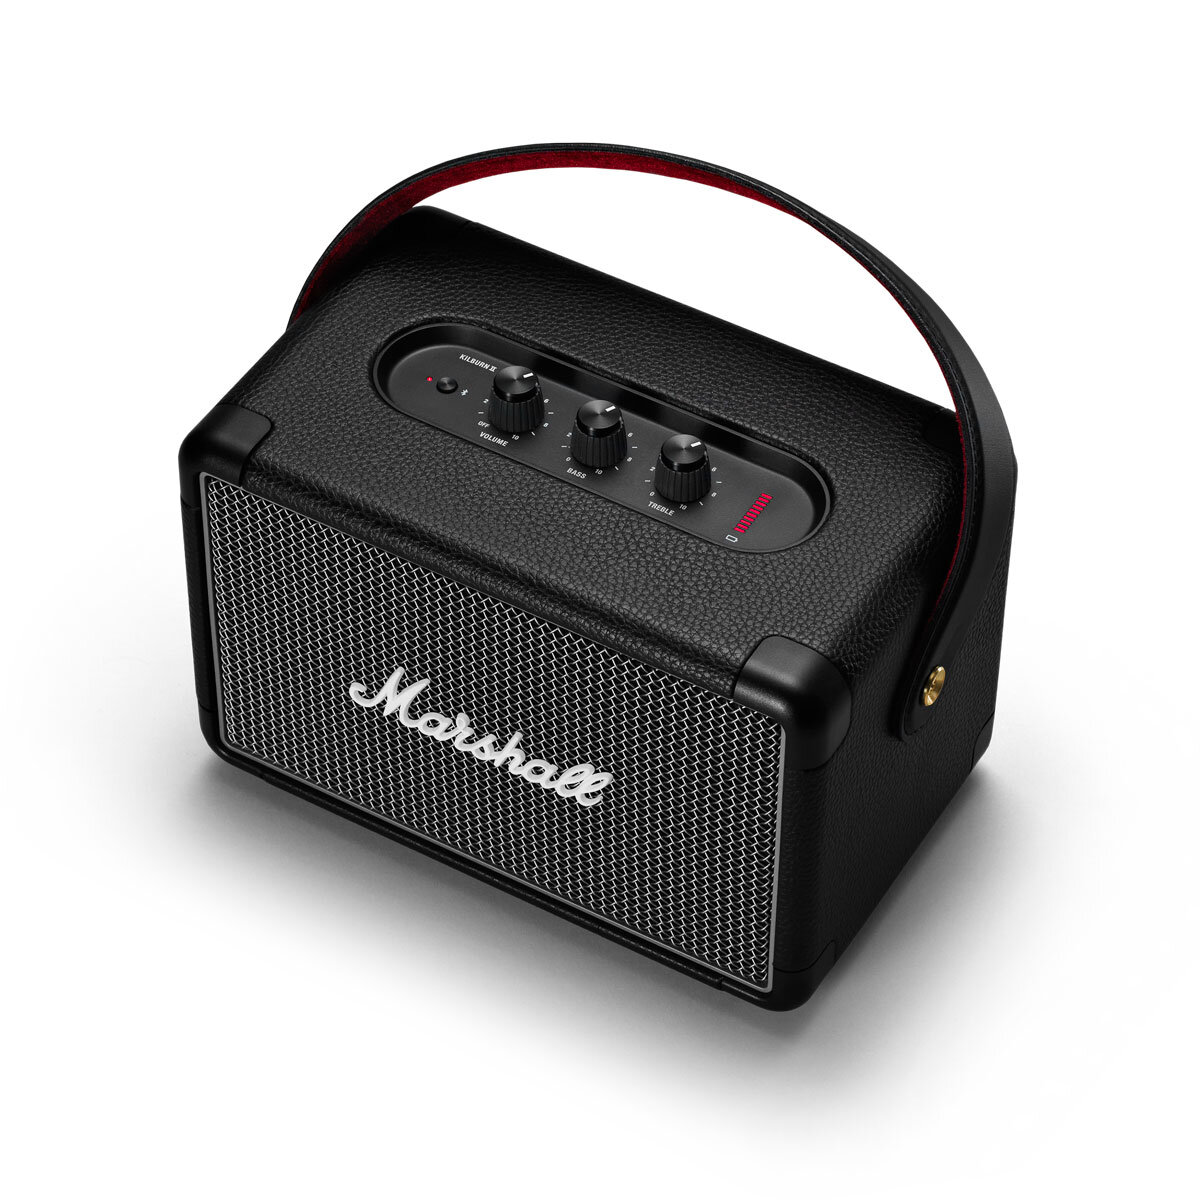 Marshall Kilburn II Portable Speaker, Wireless & Water Resistant in Black